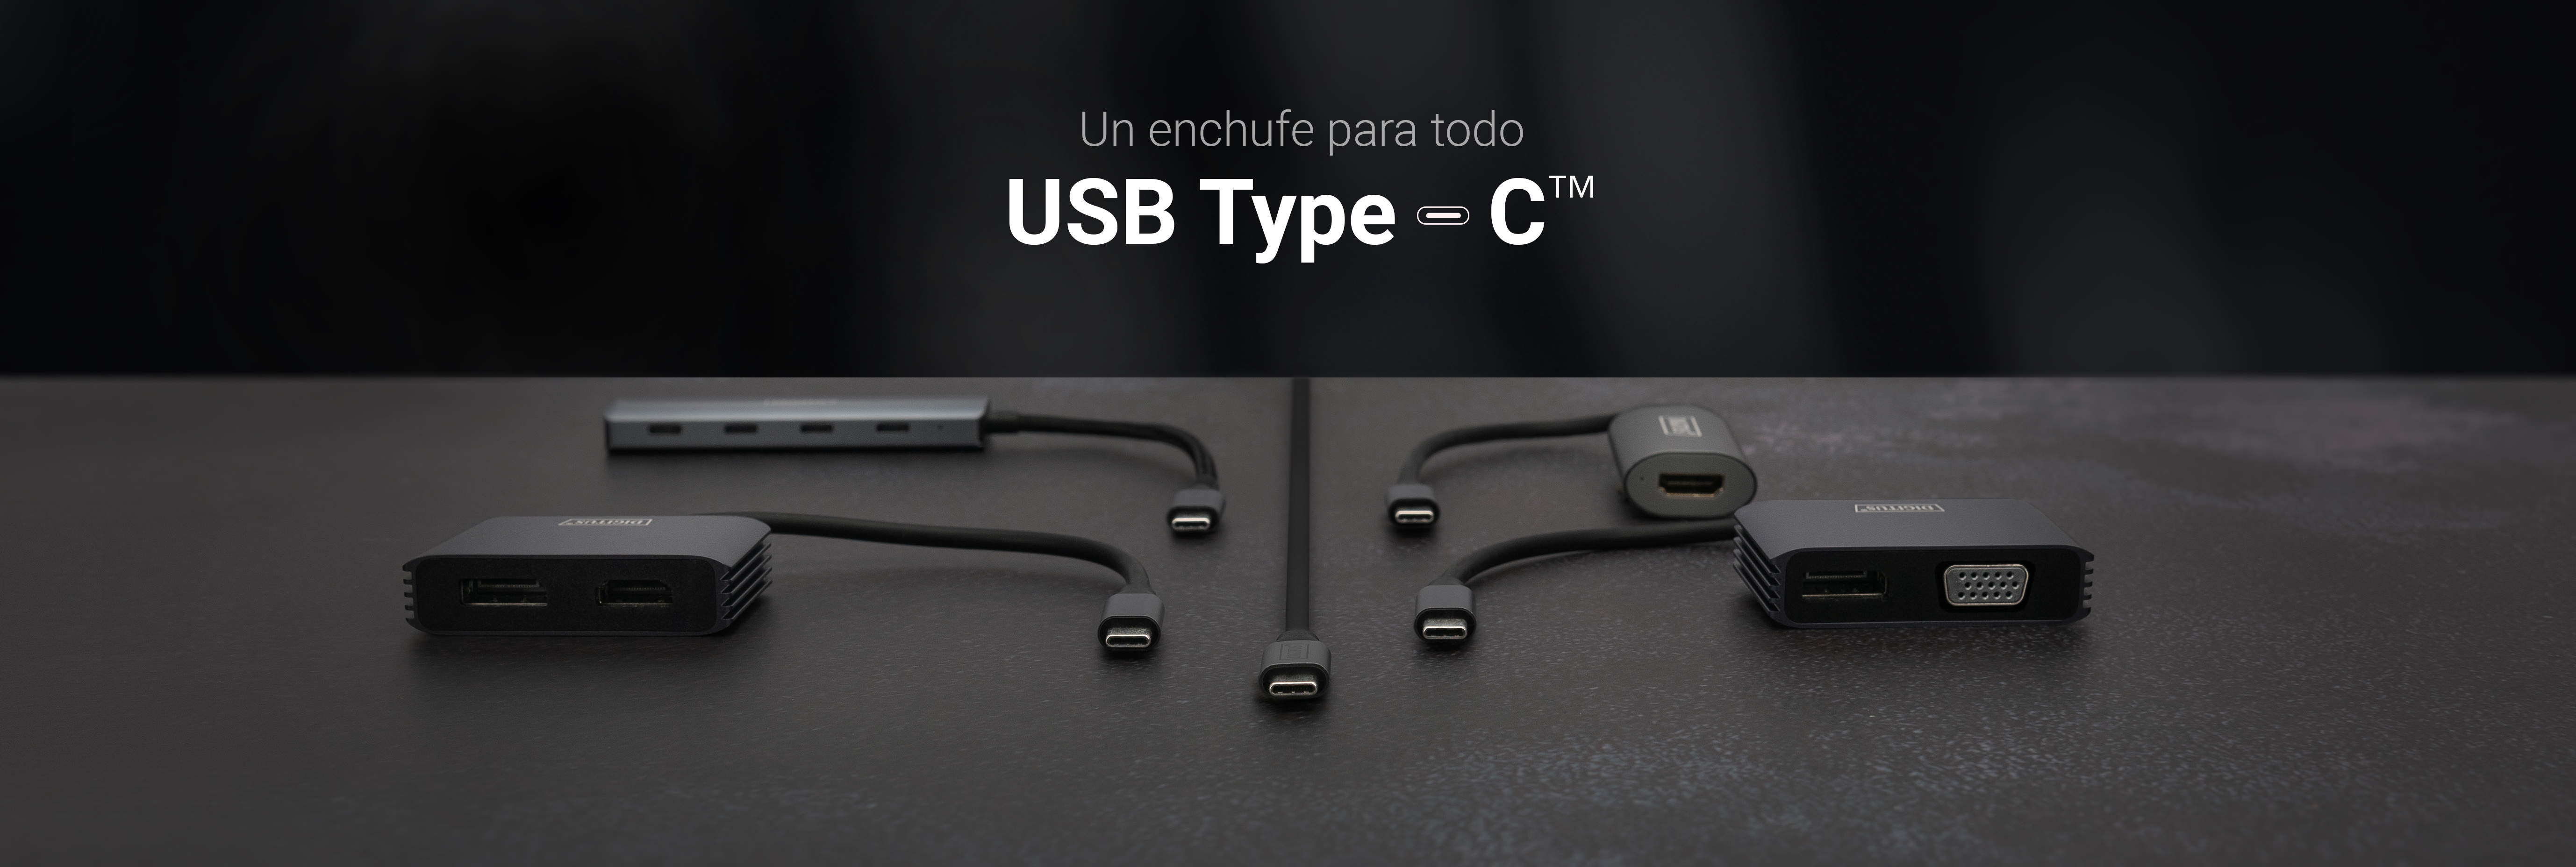 Thunderbolt3 vs USB 3.1 Gen2 Tipo C: Transmisión más rápida, mayor